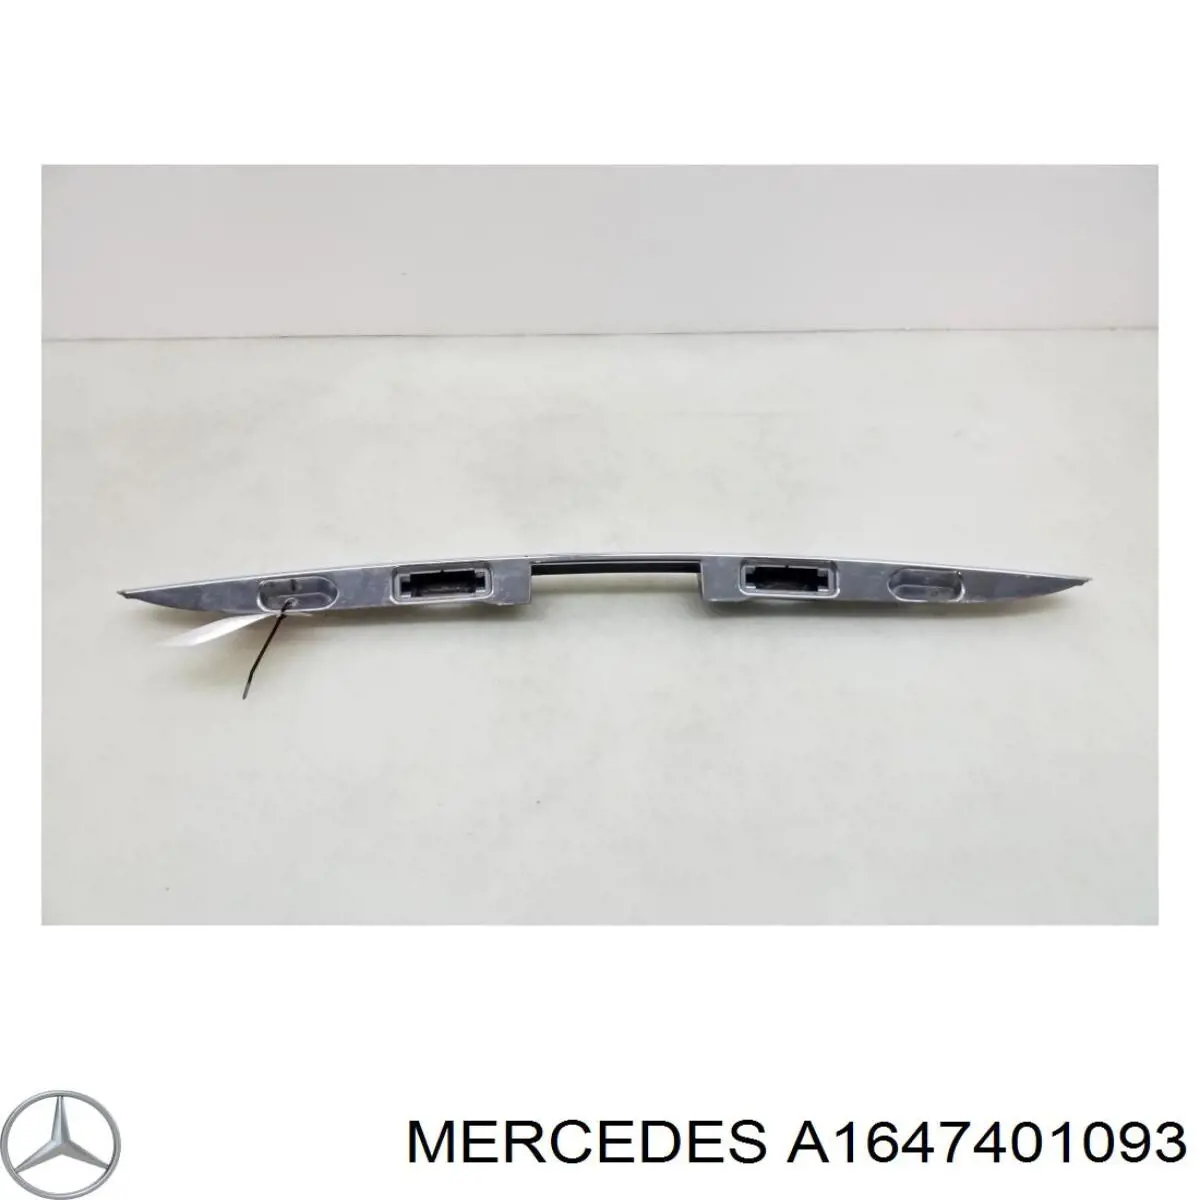 A1647401093 Mercedes